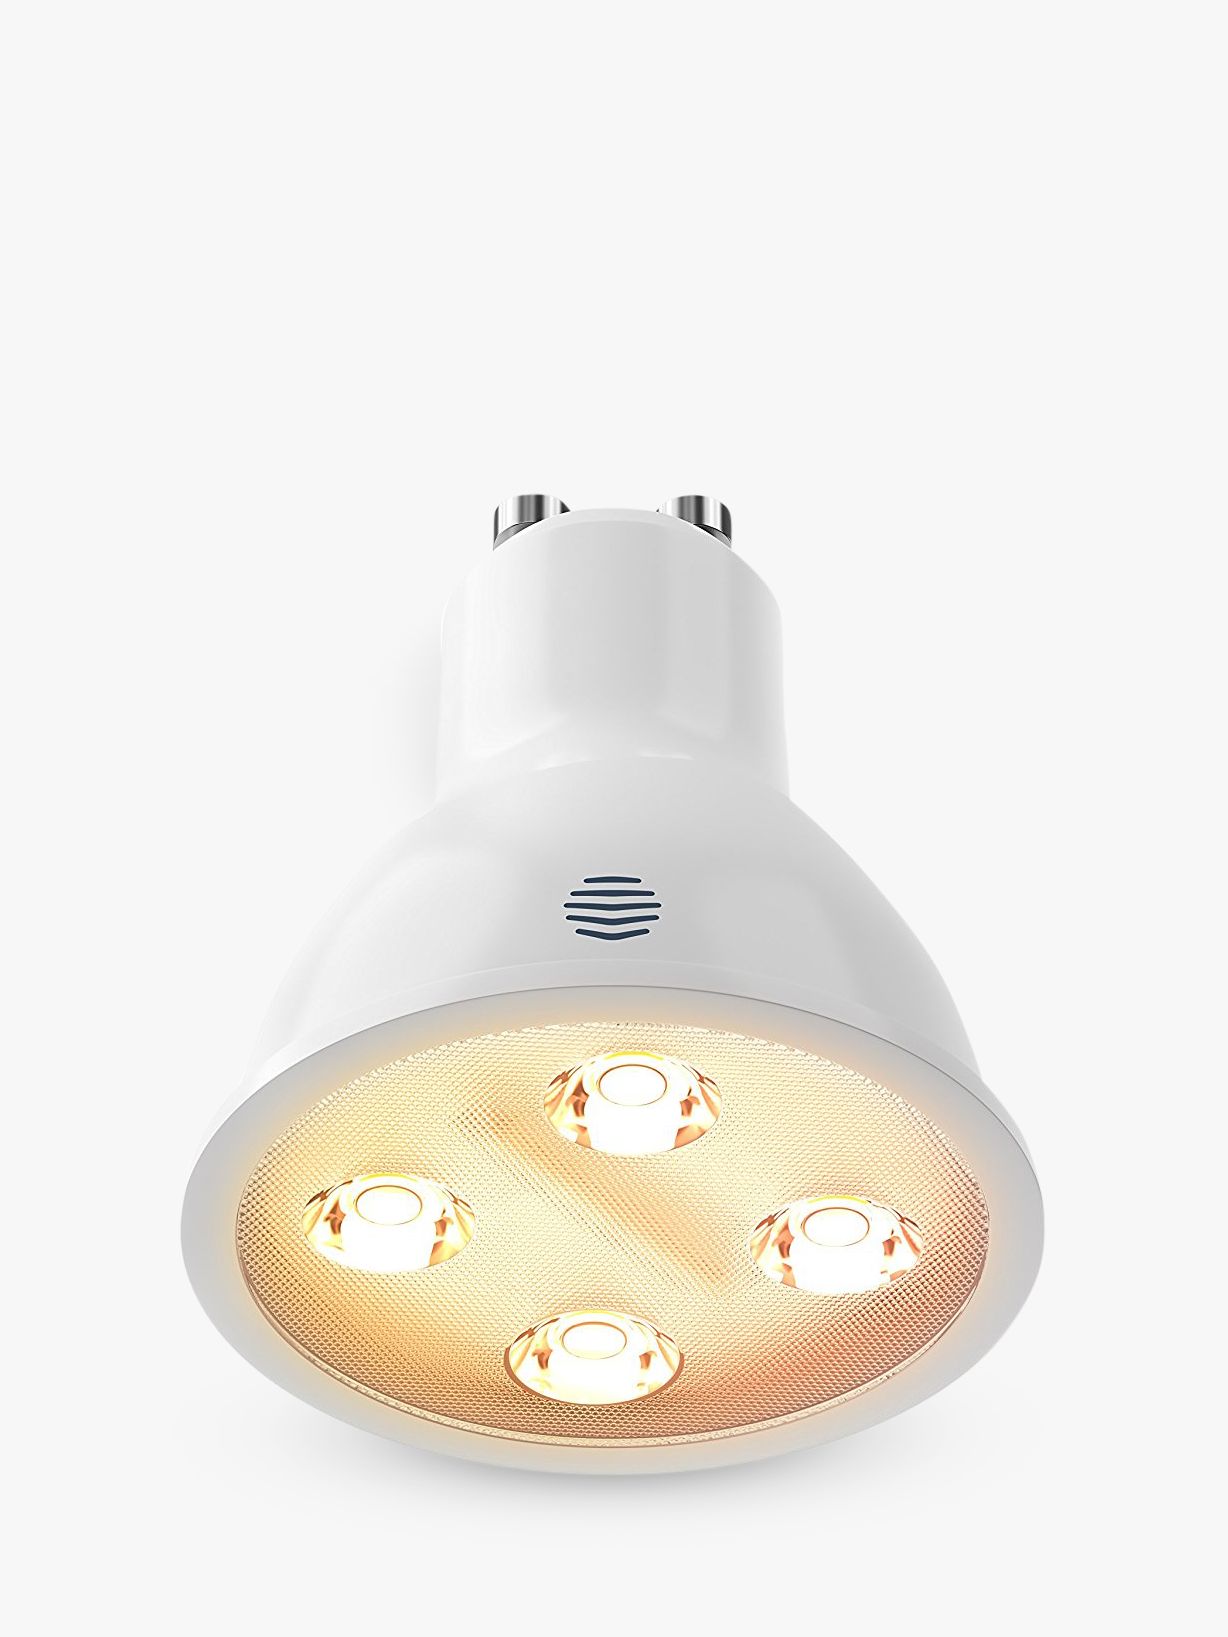 Hive Active Dimmable Warm White Wireless Lighting Light 4.8W GU10 Bulb, Single